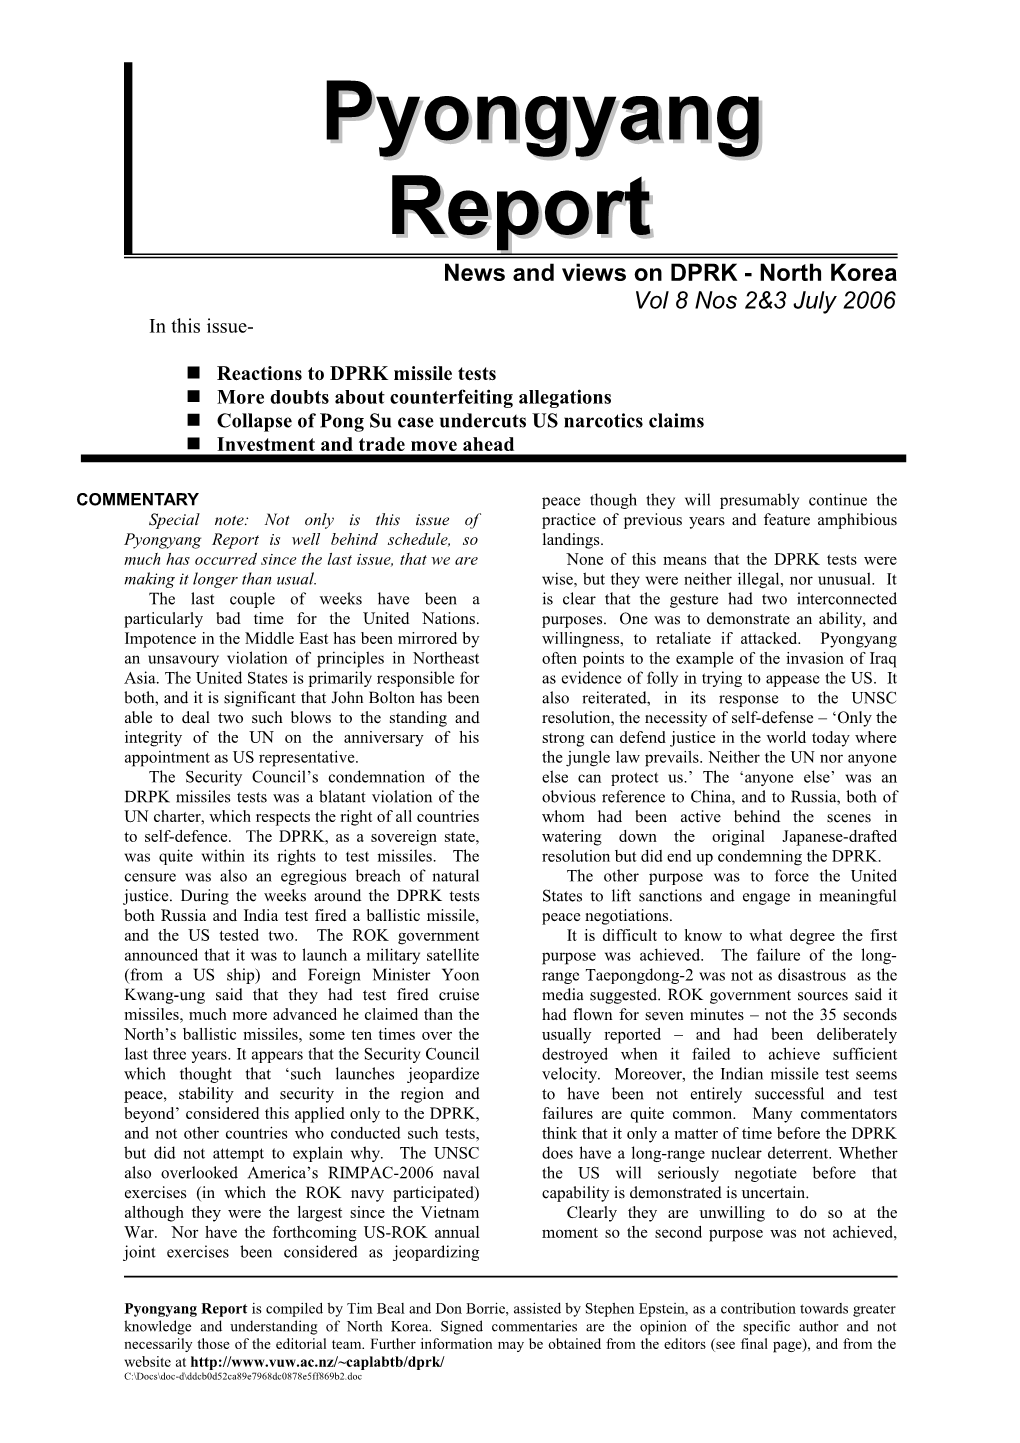 Pyongyang Report Vol 8 Nos. 2&3, July 2006